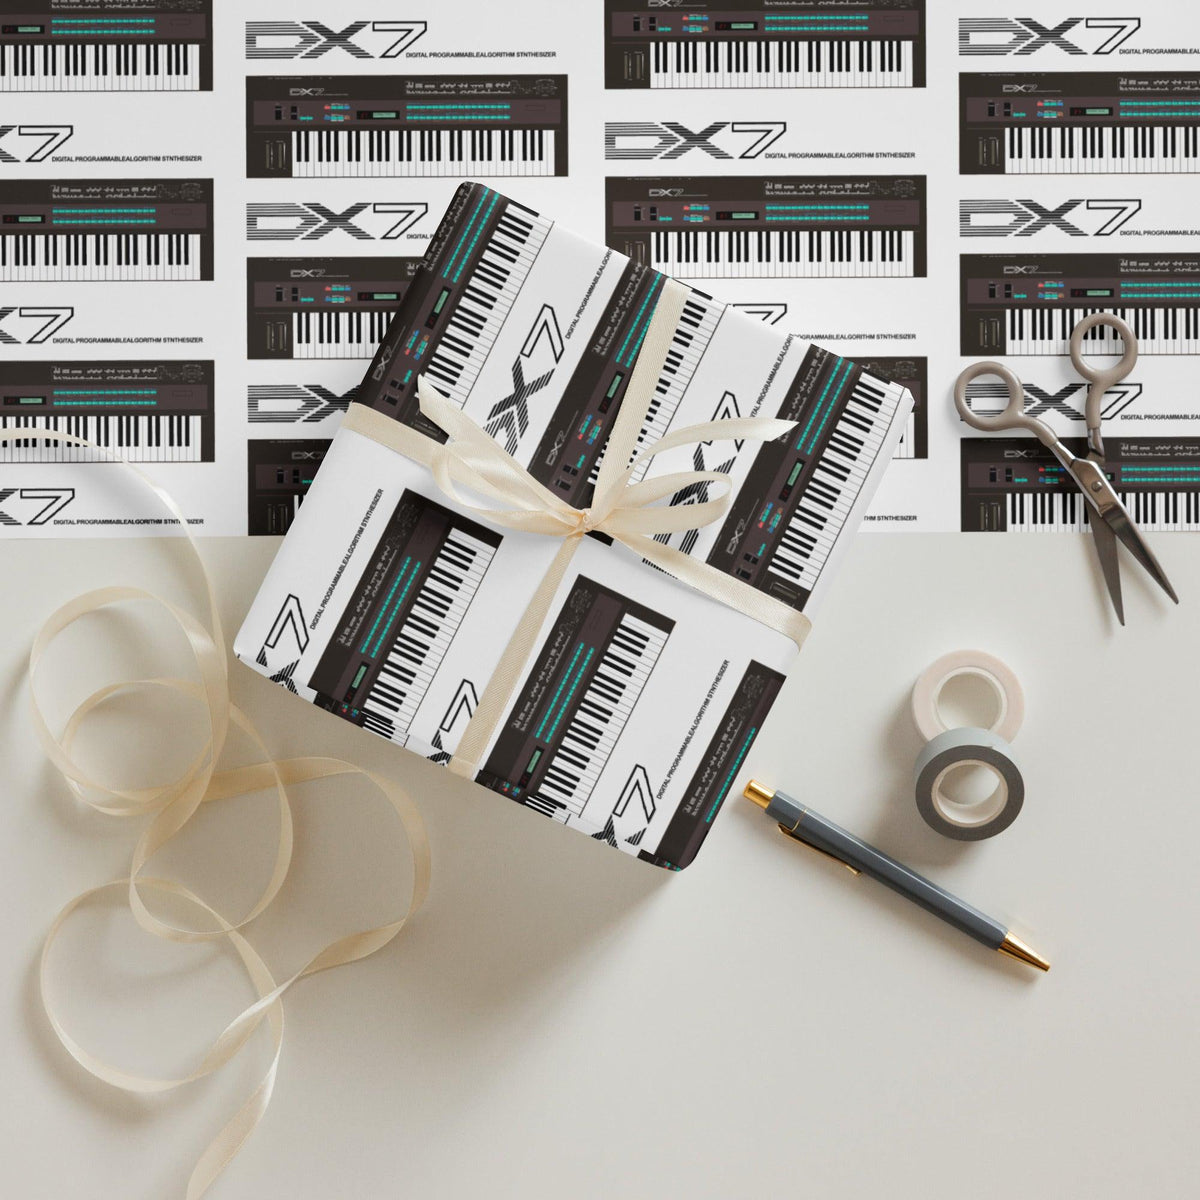 Yamaha® DX-7 Inspired Design | Vintage Keyboard | DX7 Wrapping Paper Sheets (3 rolls) - Tedeschi Studio, LLC.